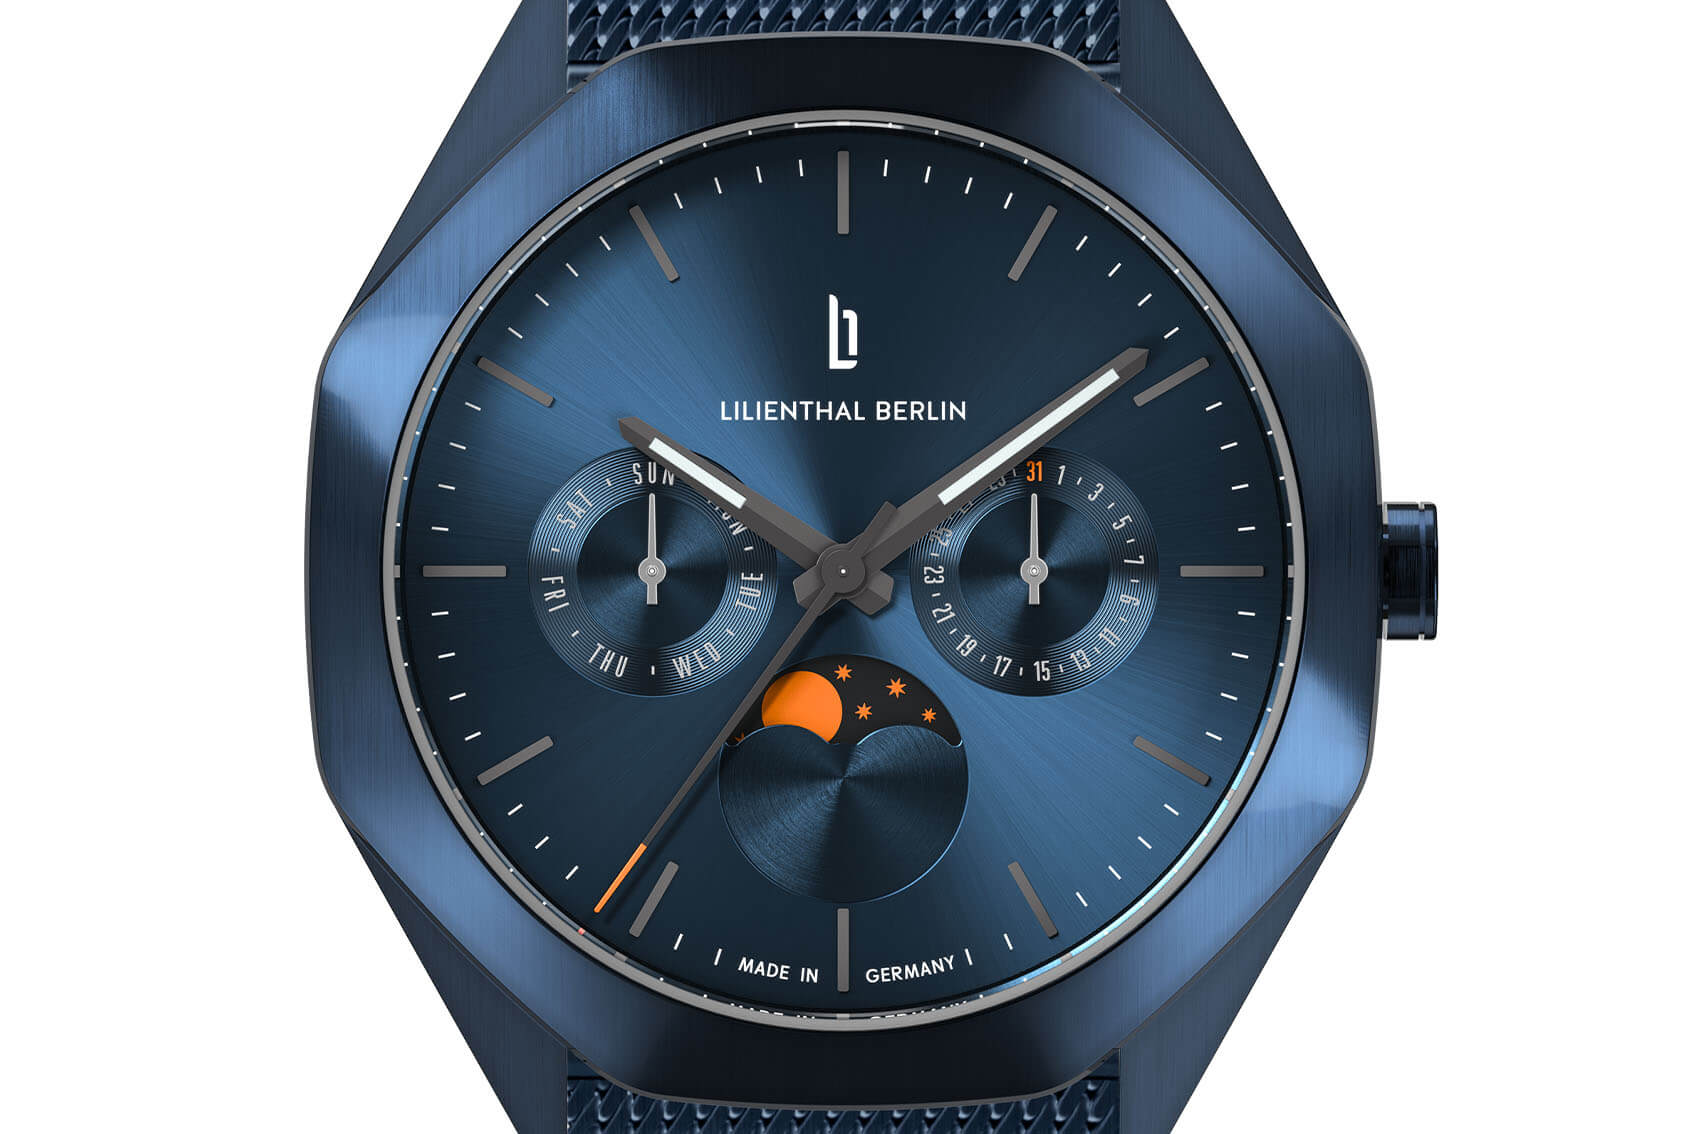 Octamoon Day Date Blue Orange - Mesh blue | All Watches | Watches 